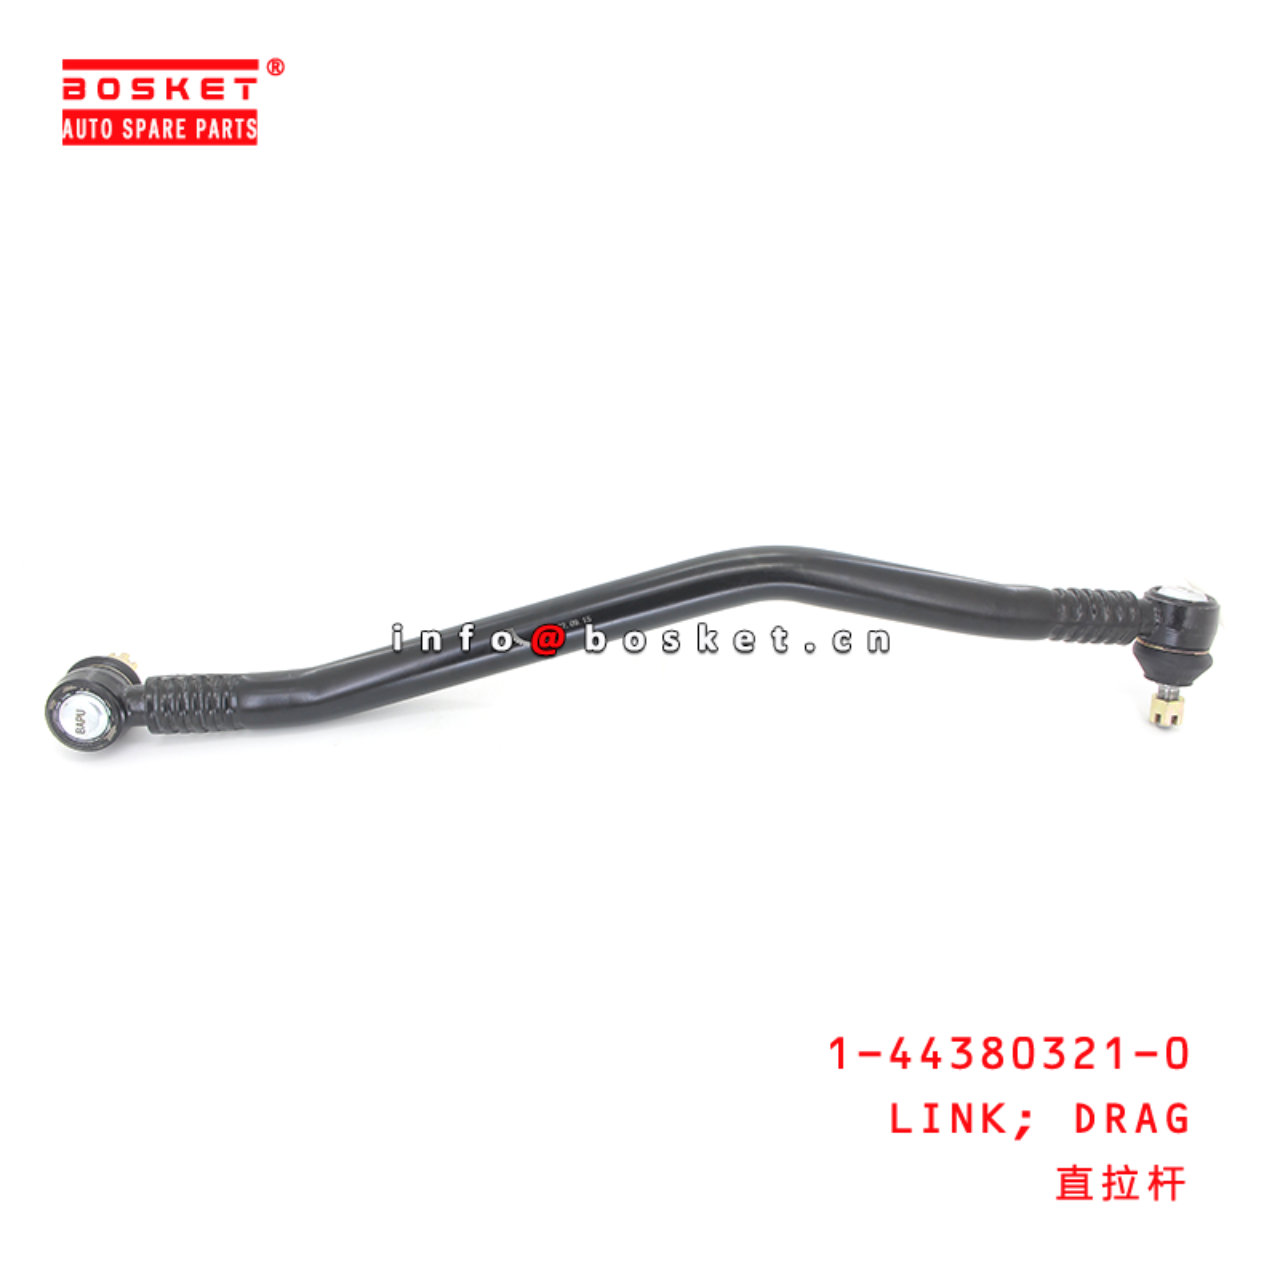 1-44380321-0 Drag Link Suitable for ISUZU 1443803210